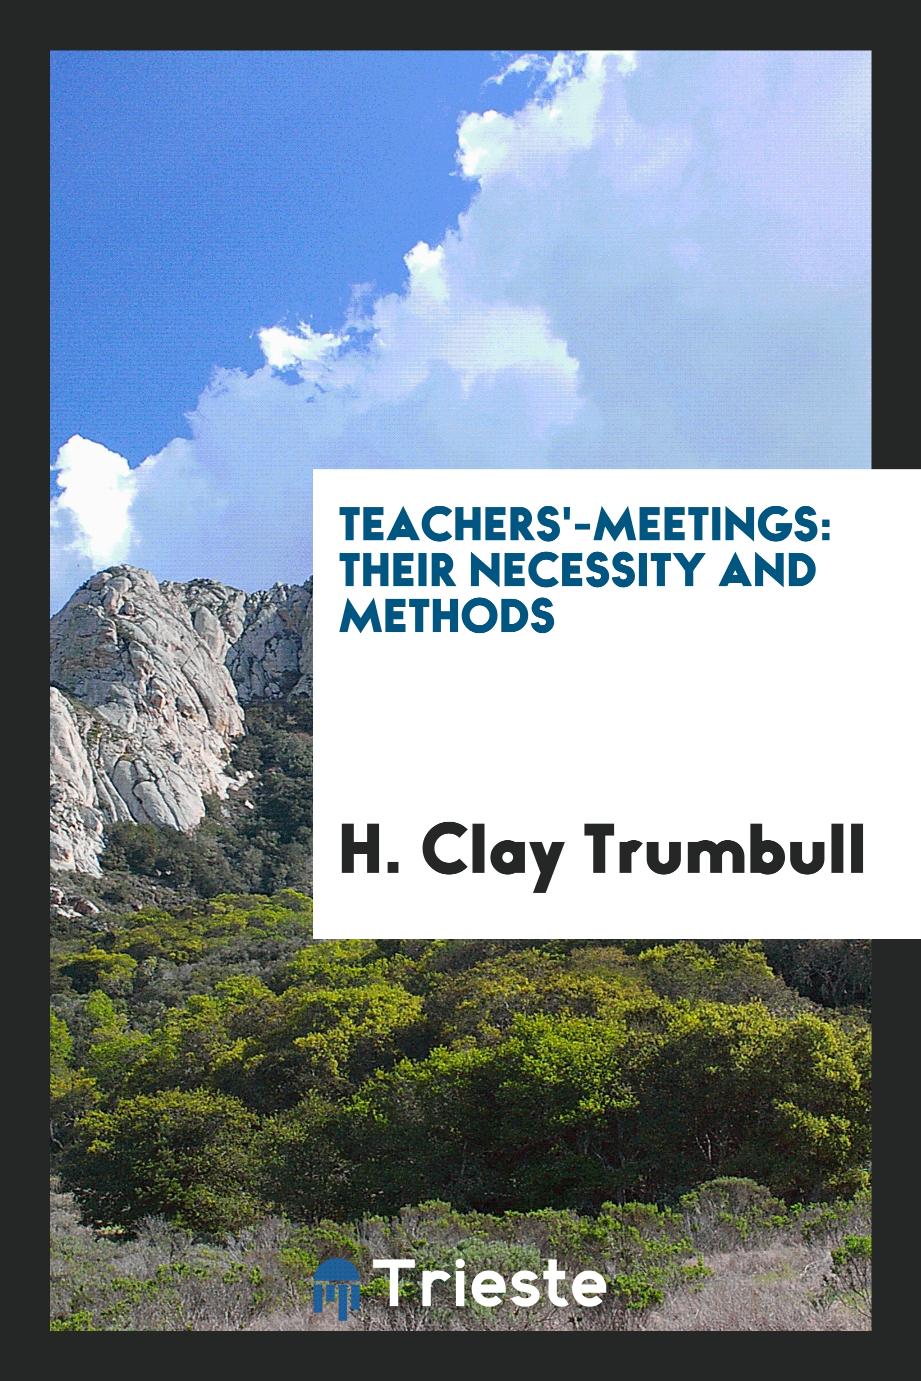 Teachers'-meetings: their necessity and methods